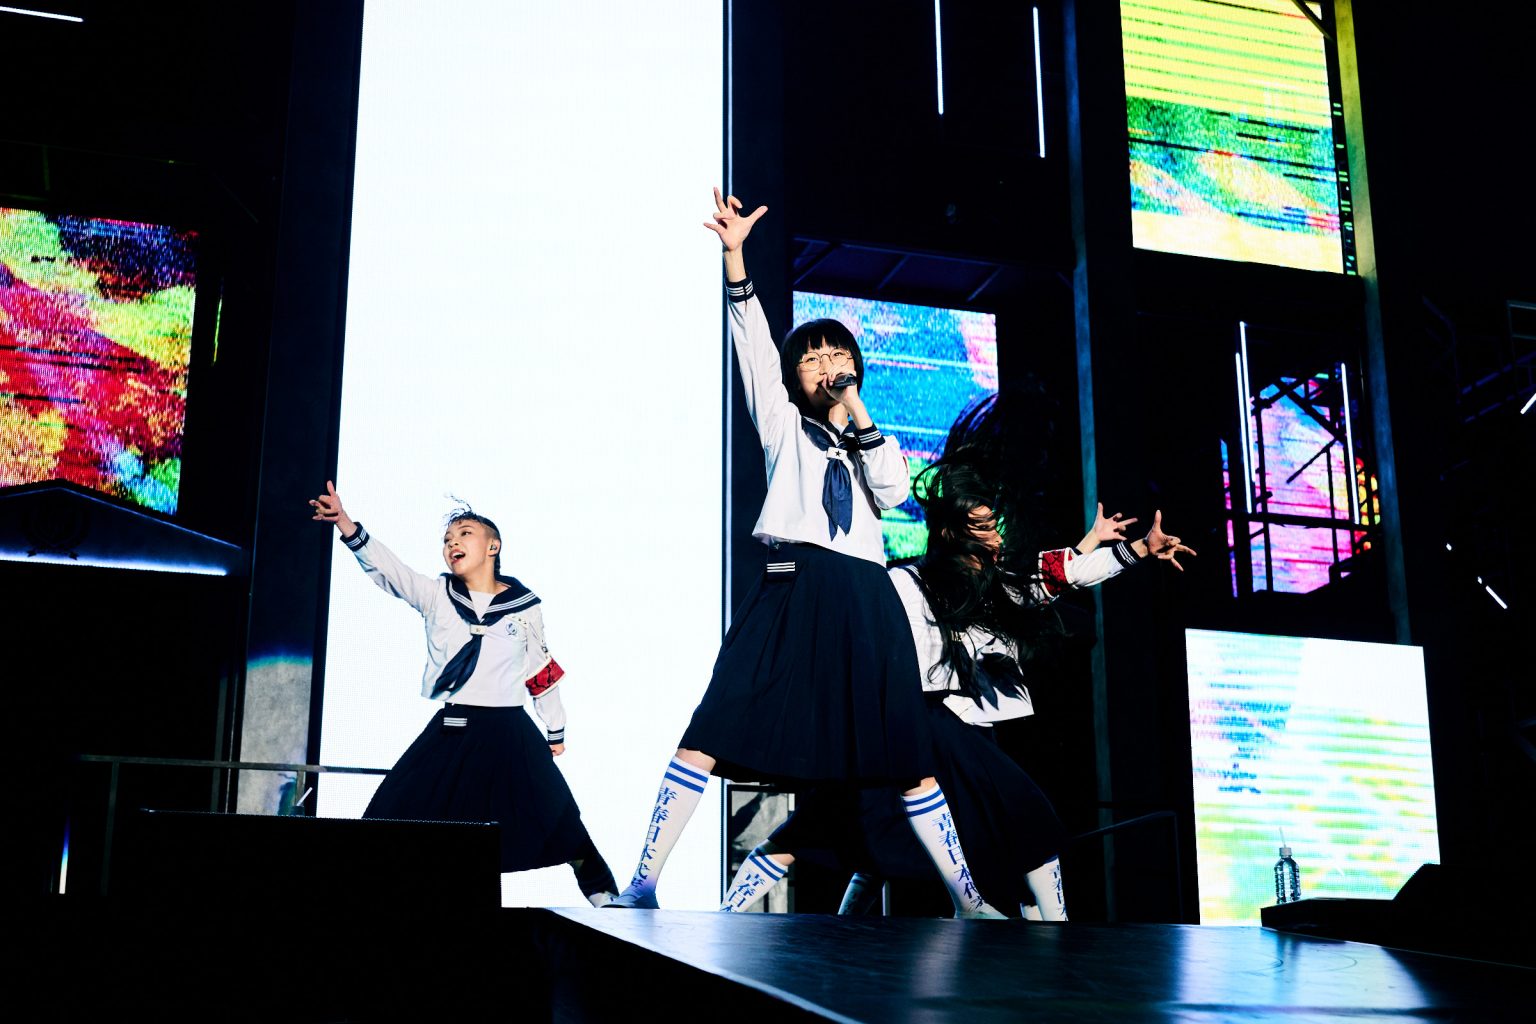 ATARASHII GAKKO! Performs for 8,000 Fans at First Arena Concert